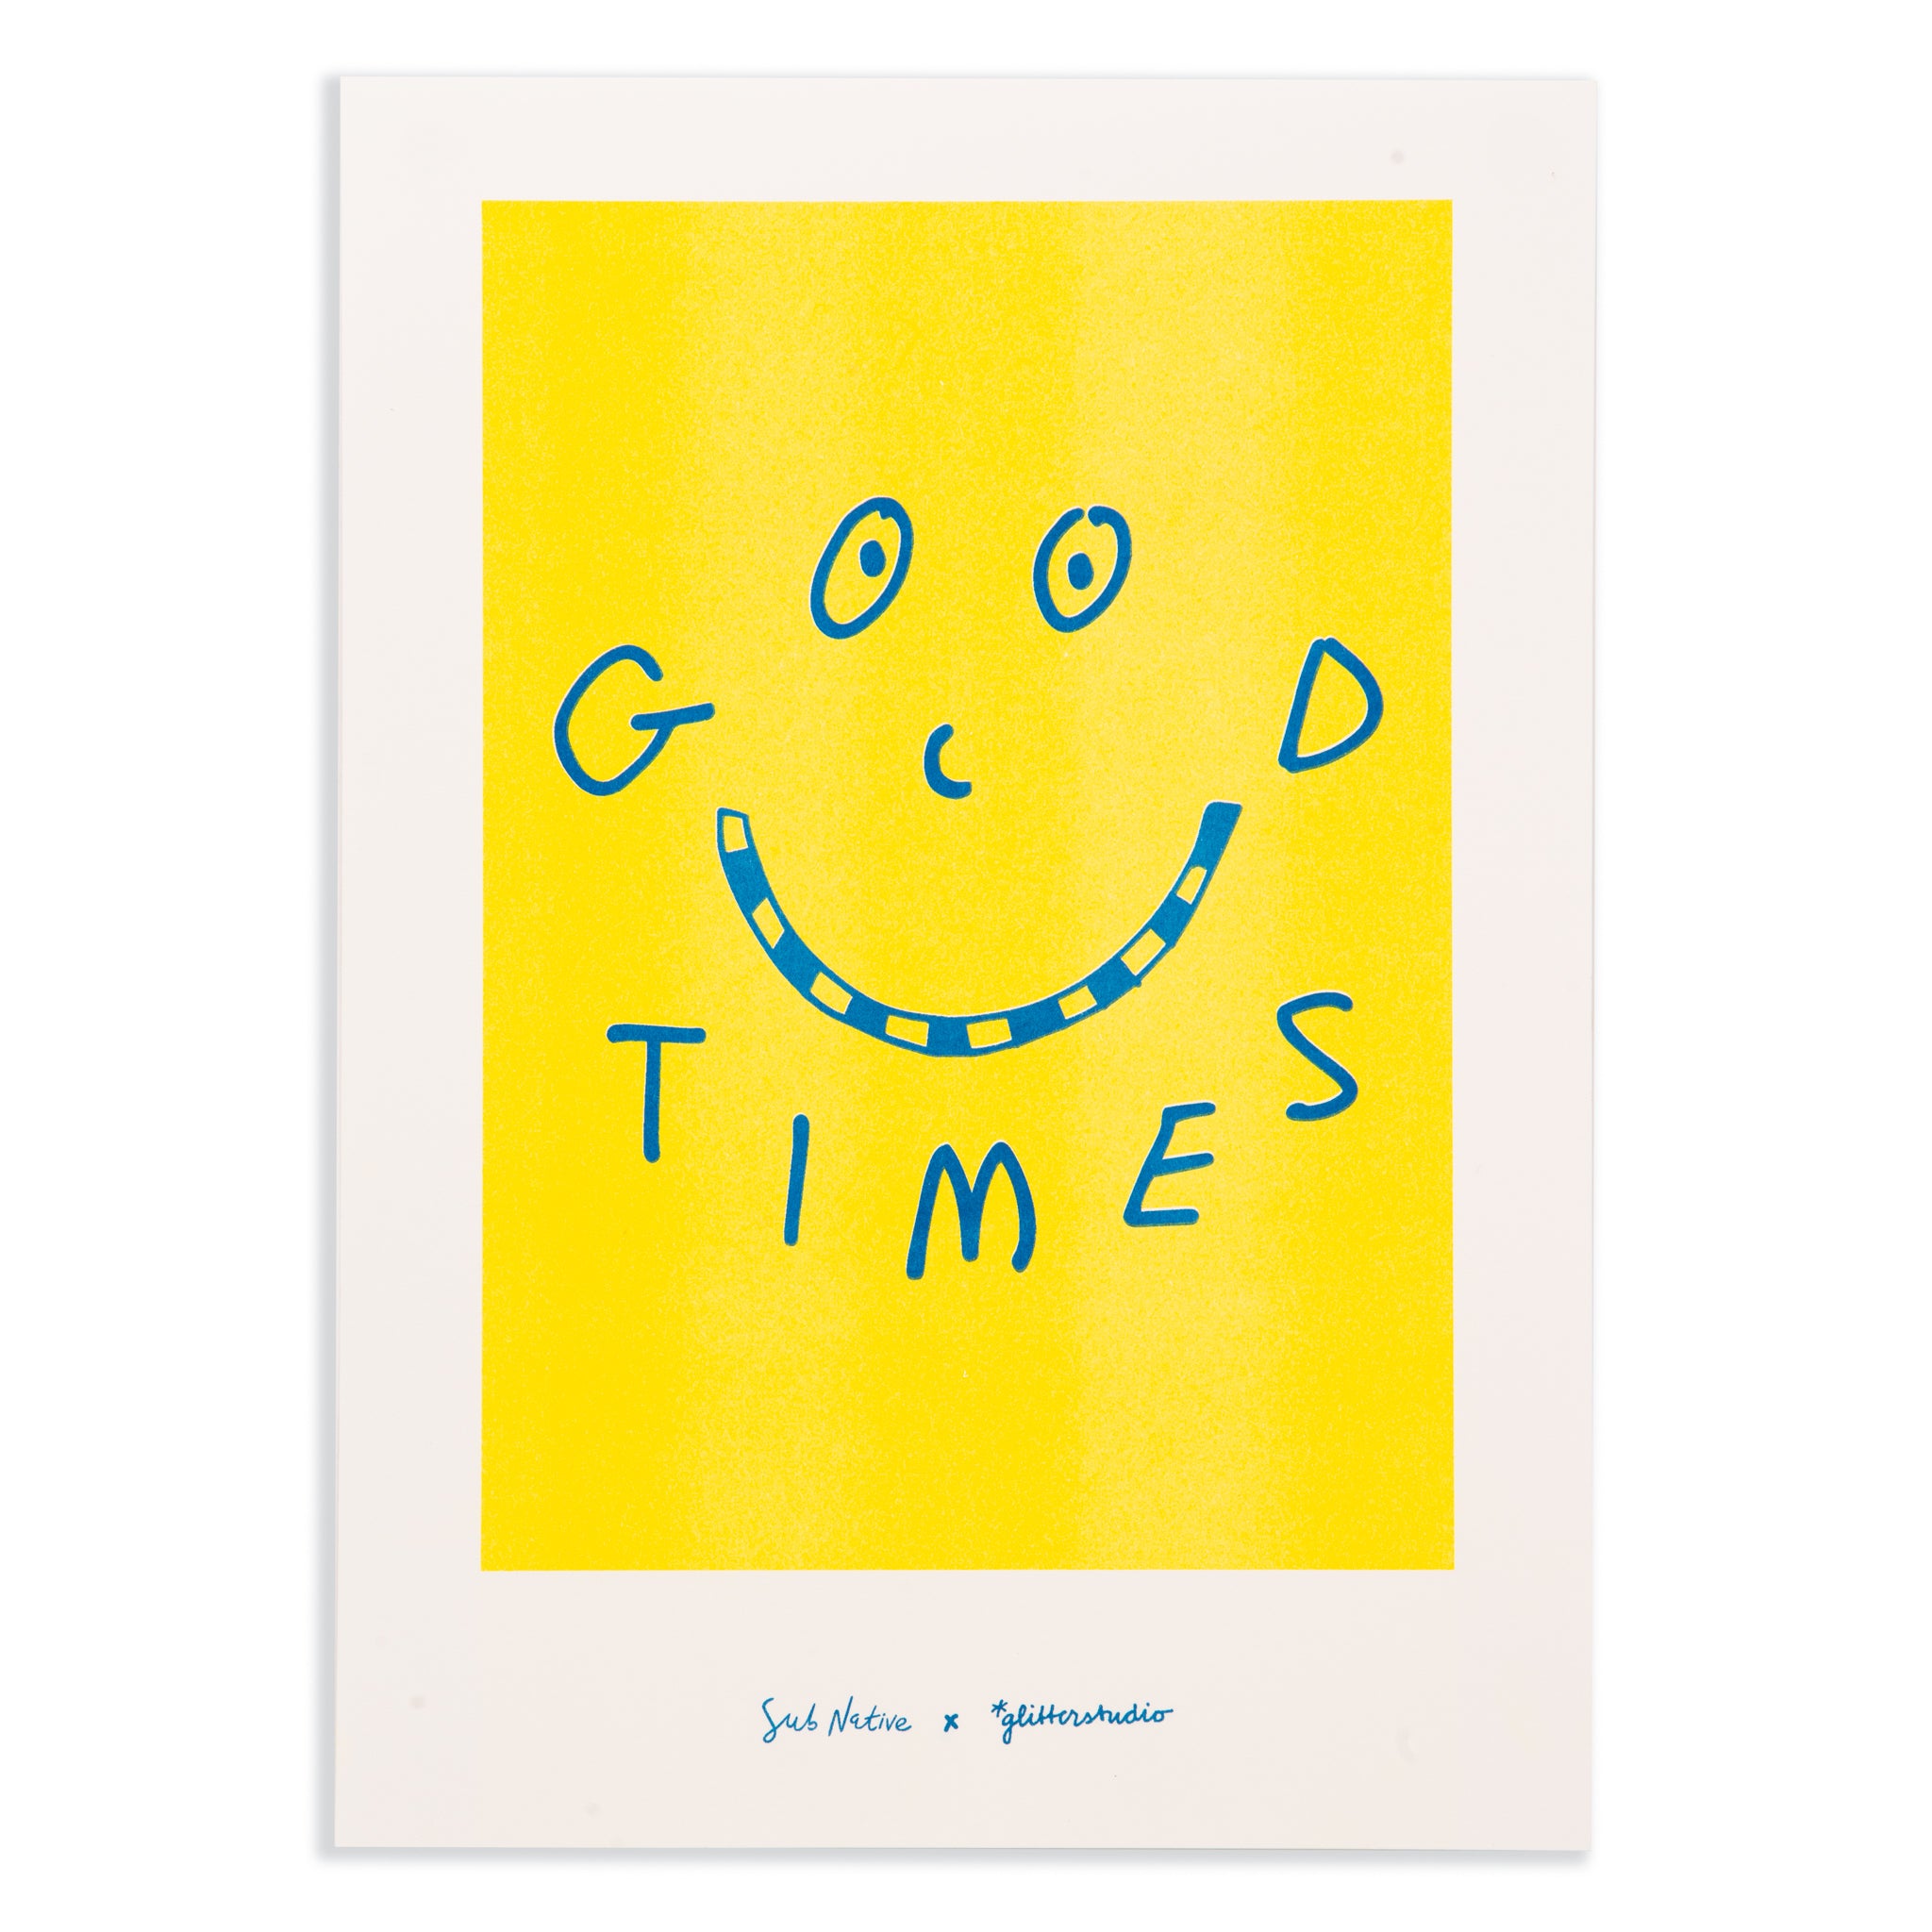 'Good Times' Sub Native X Glitterstudio A4 Risograph Print